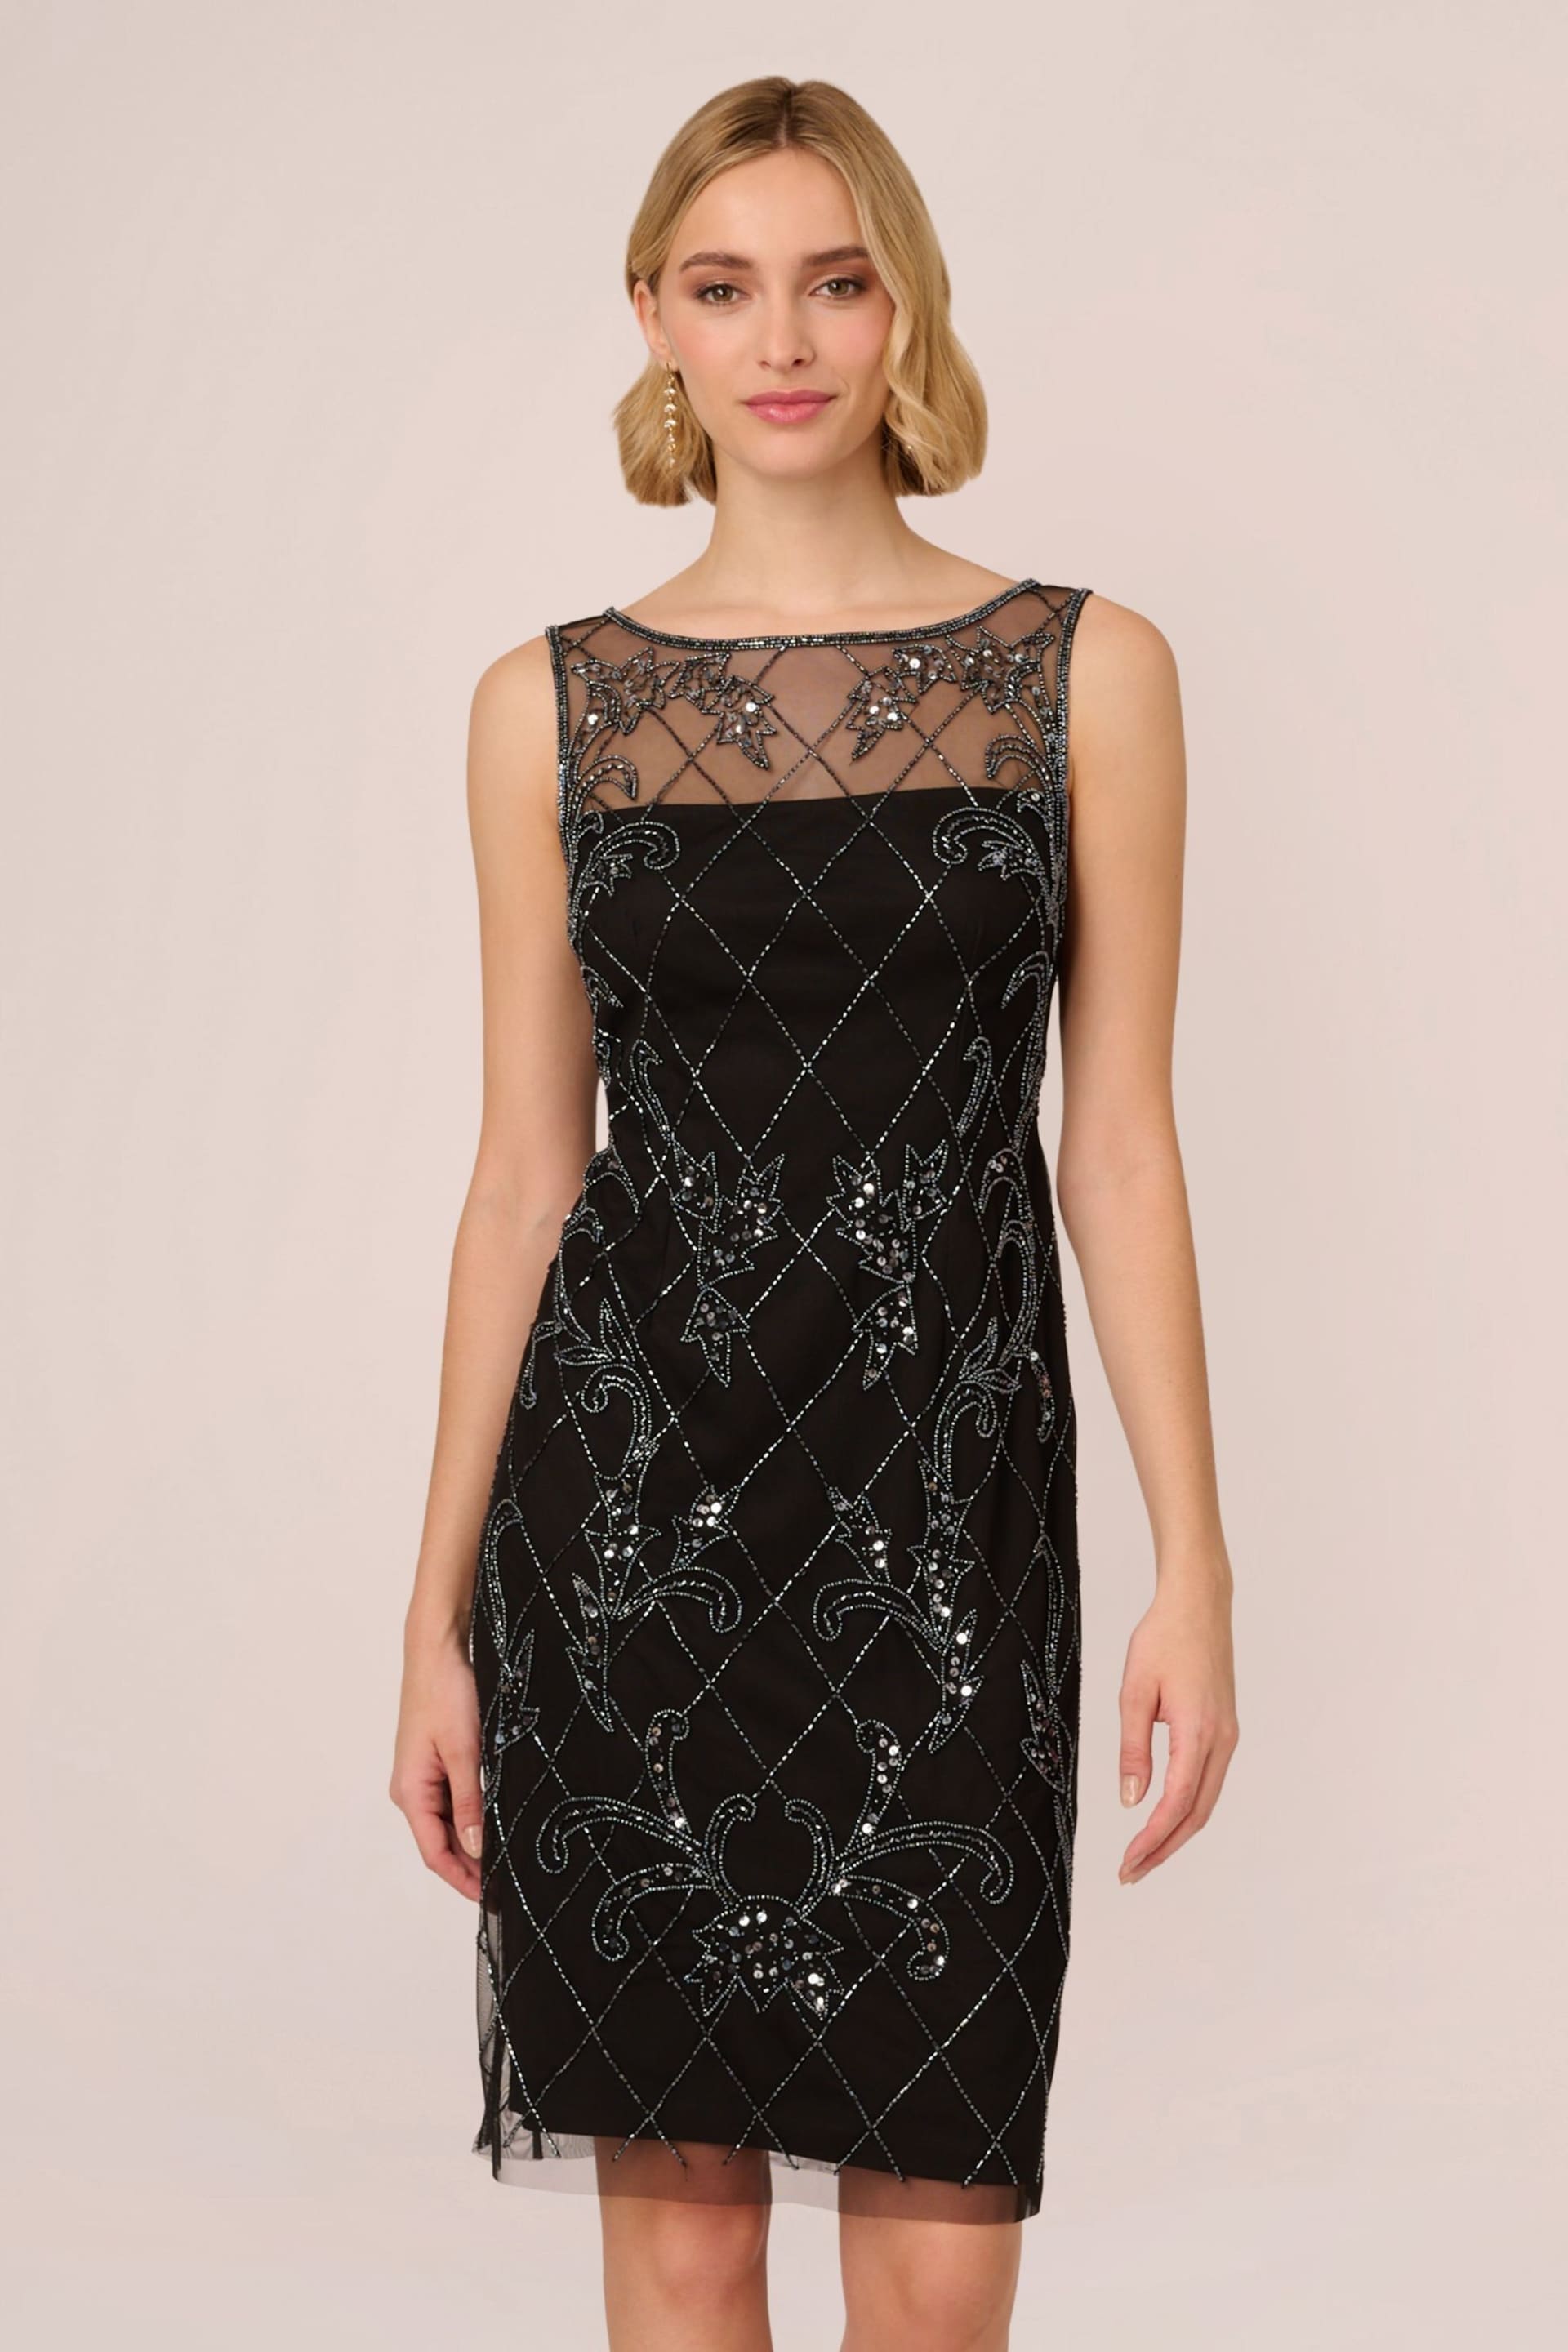 Adrianna Papell Studio Beaded Sheath Black Dress - Image 1 of 7